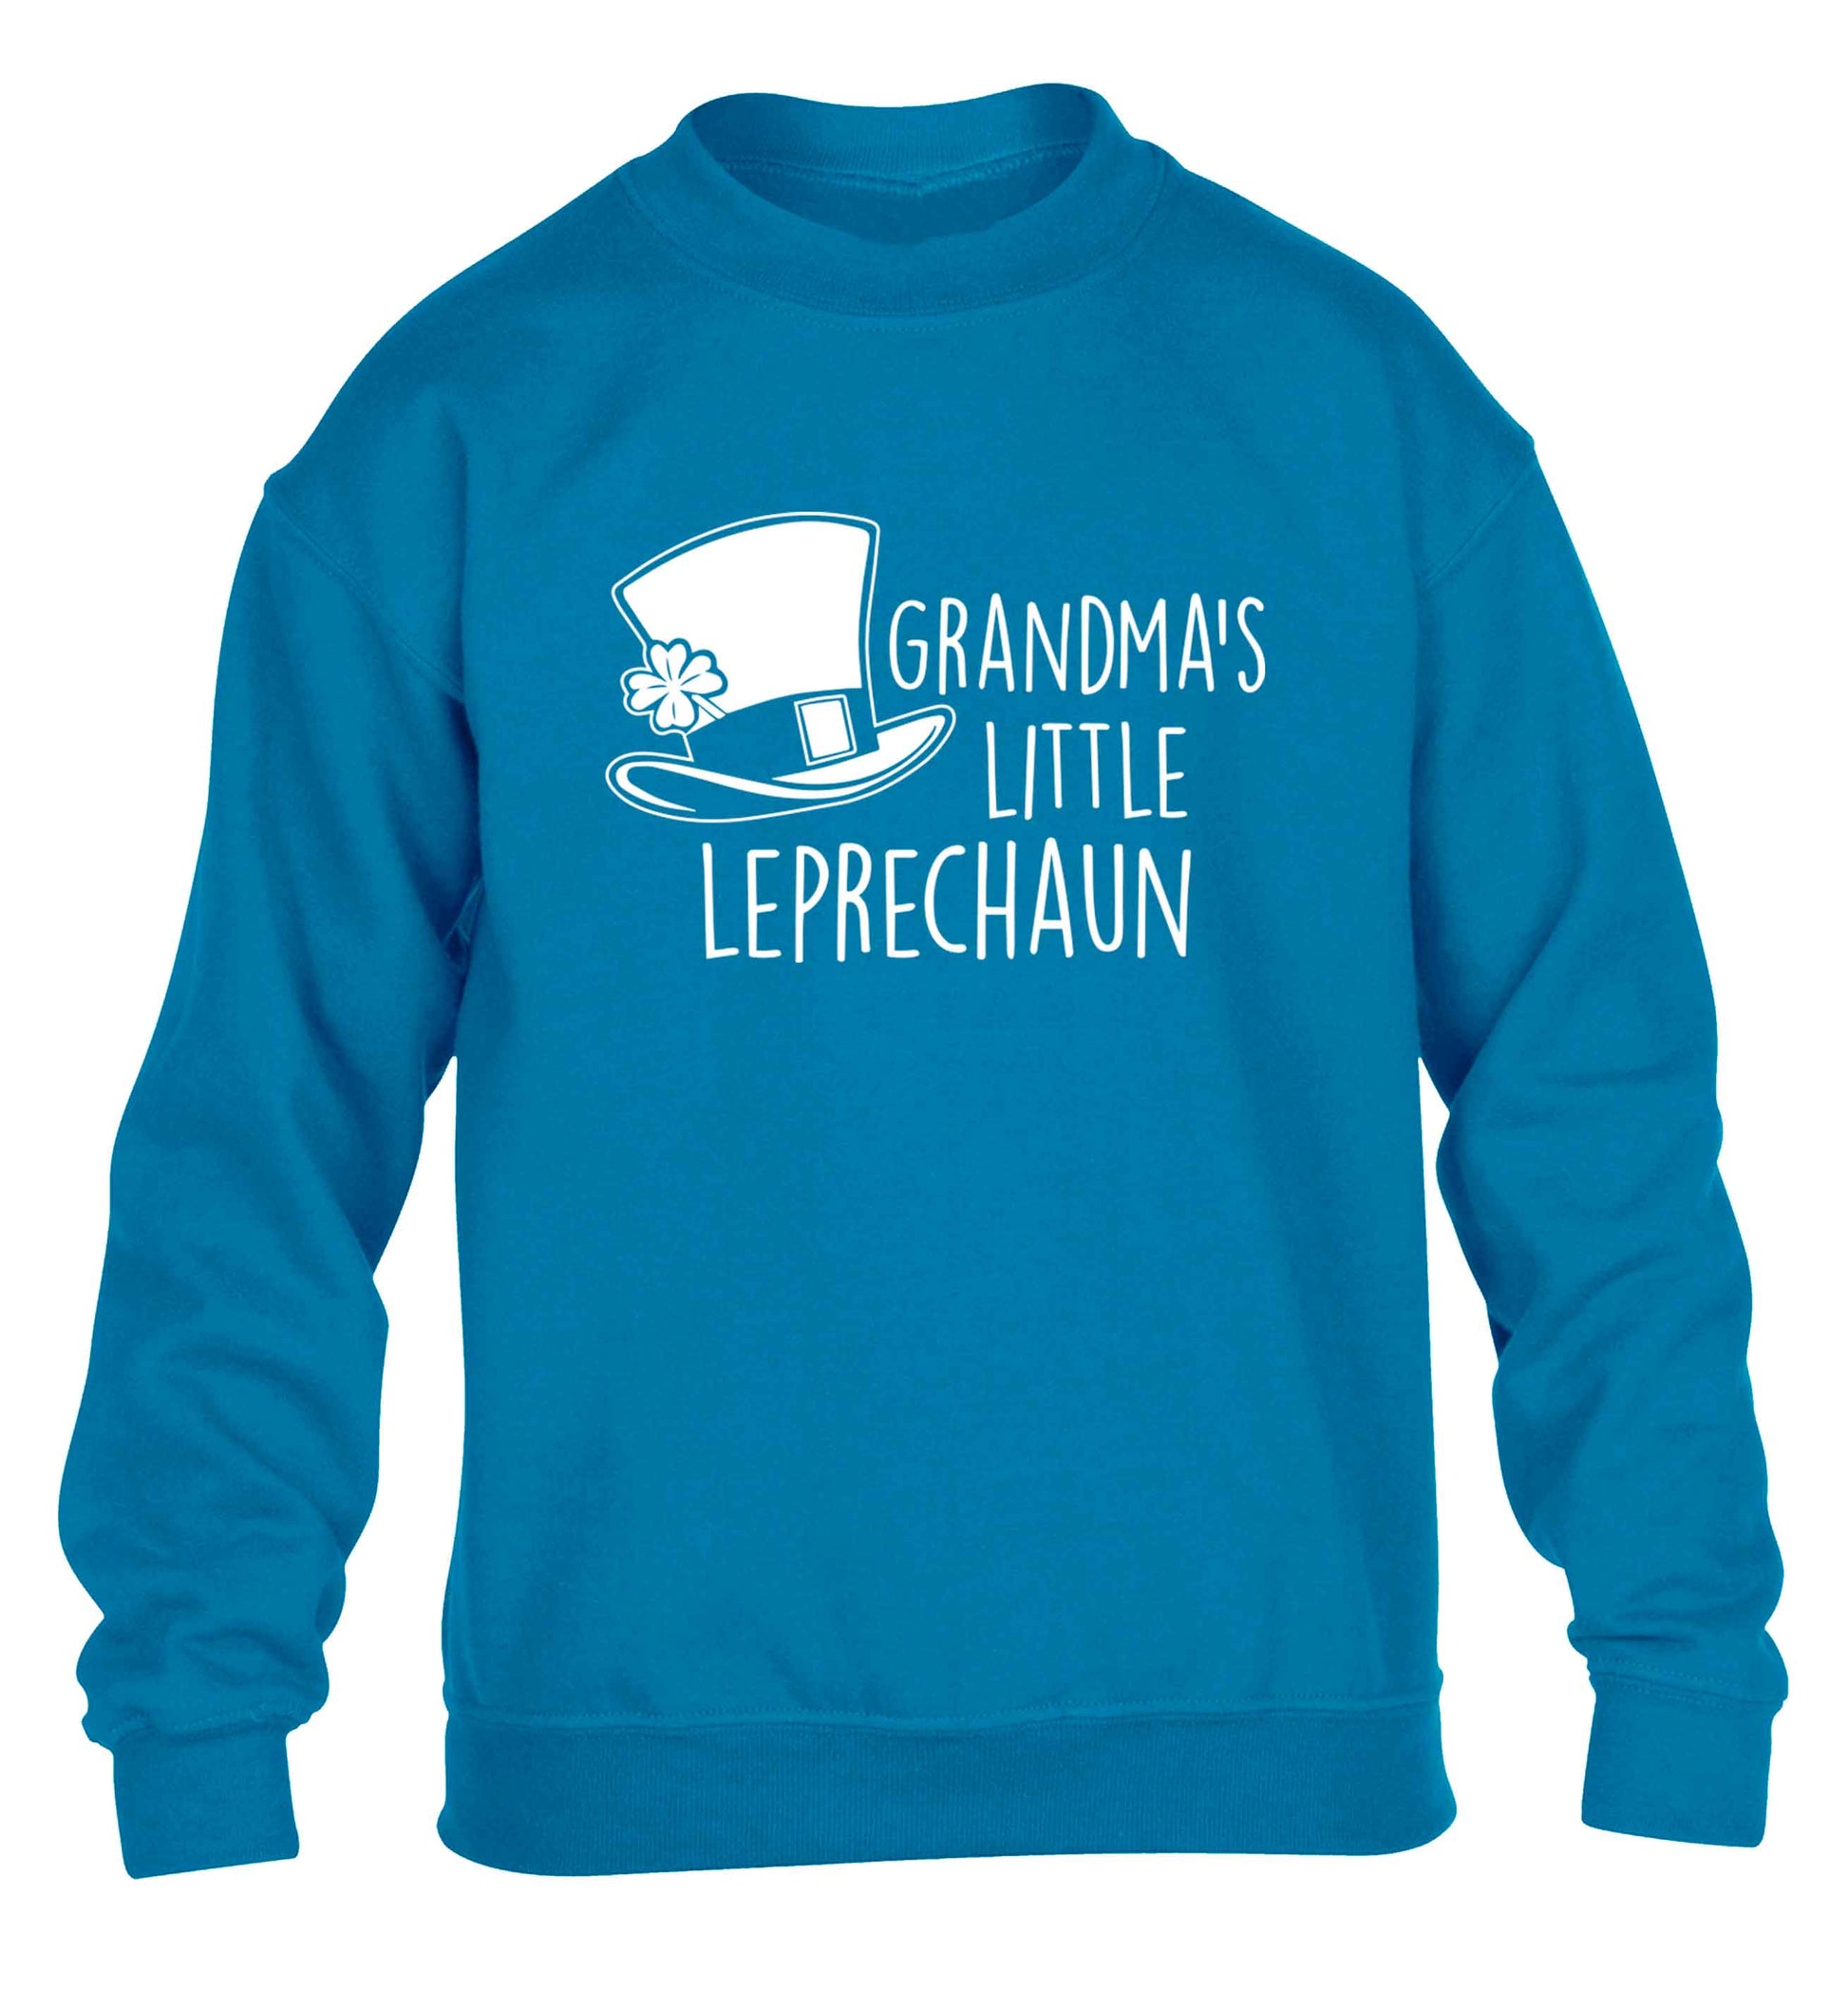 Grandma's little leprechaun children's blue sweater 12-13 Years